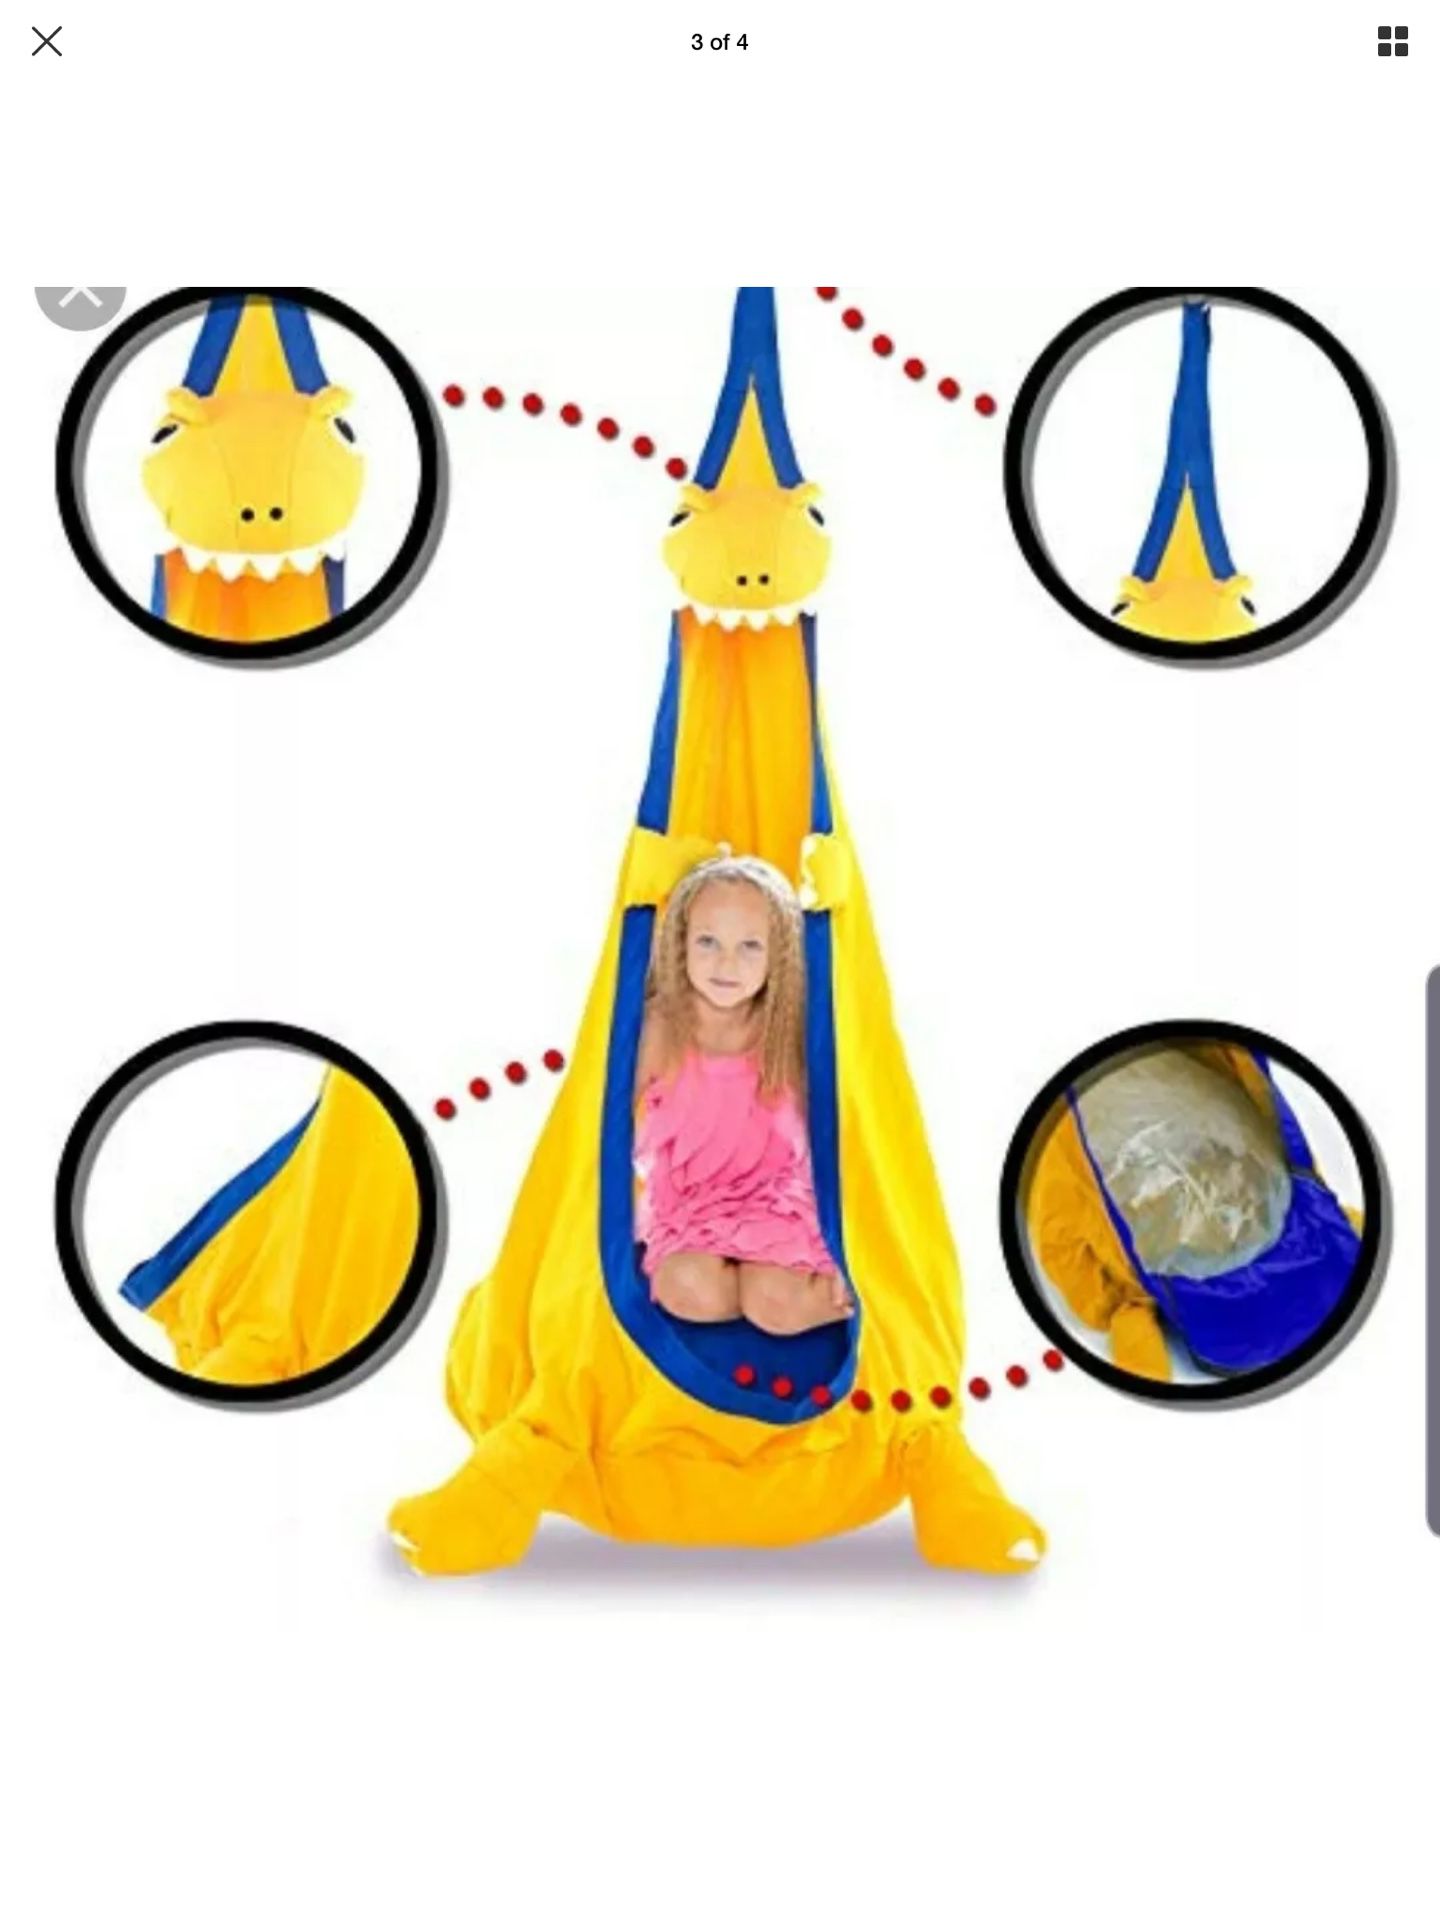 Papa Roo Dinosaur kids Child Hammock Pod Swing Chair Nook Animal Tent, 100% Cotton - yellow indoor/outdoor